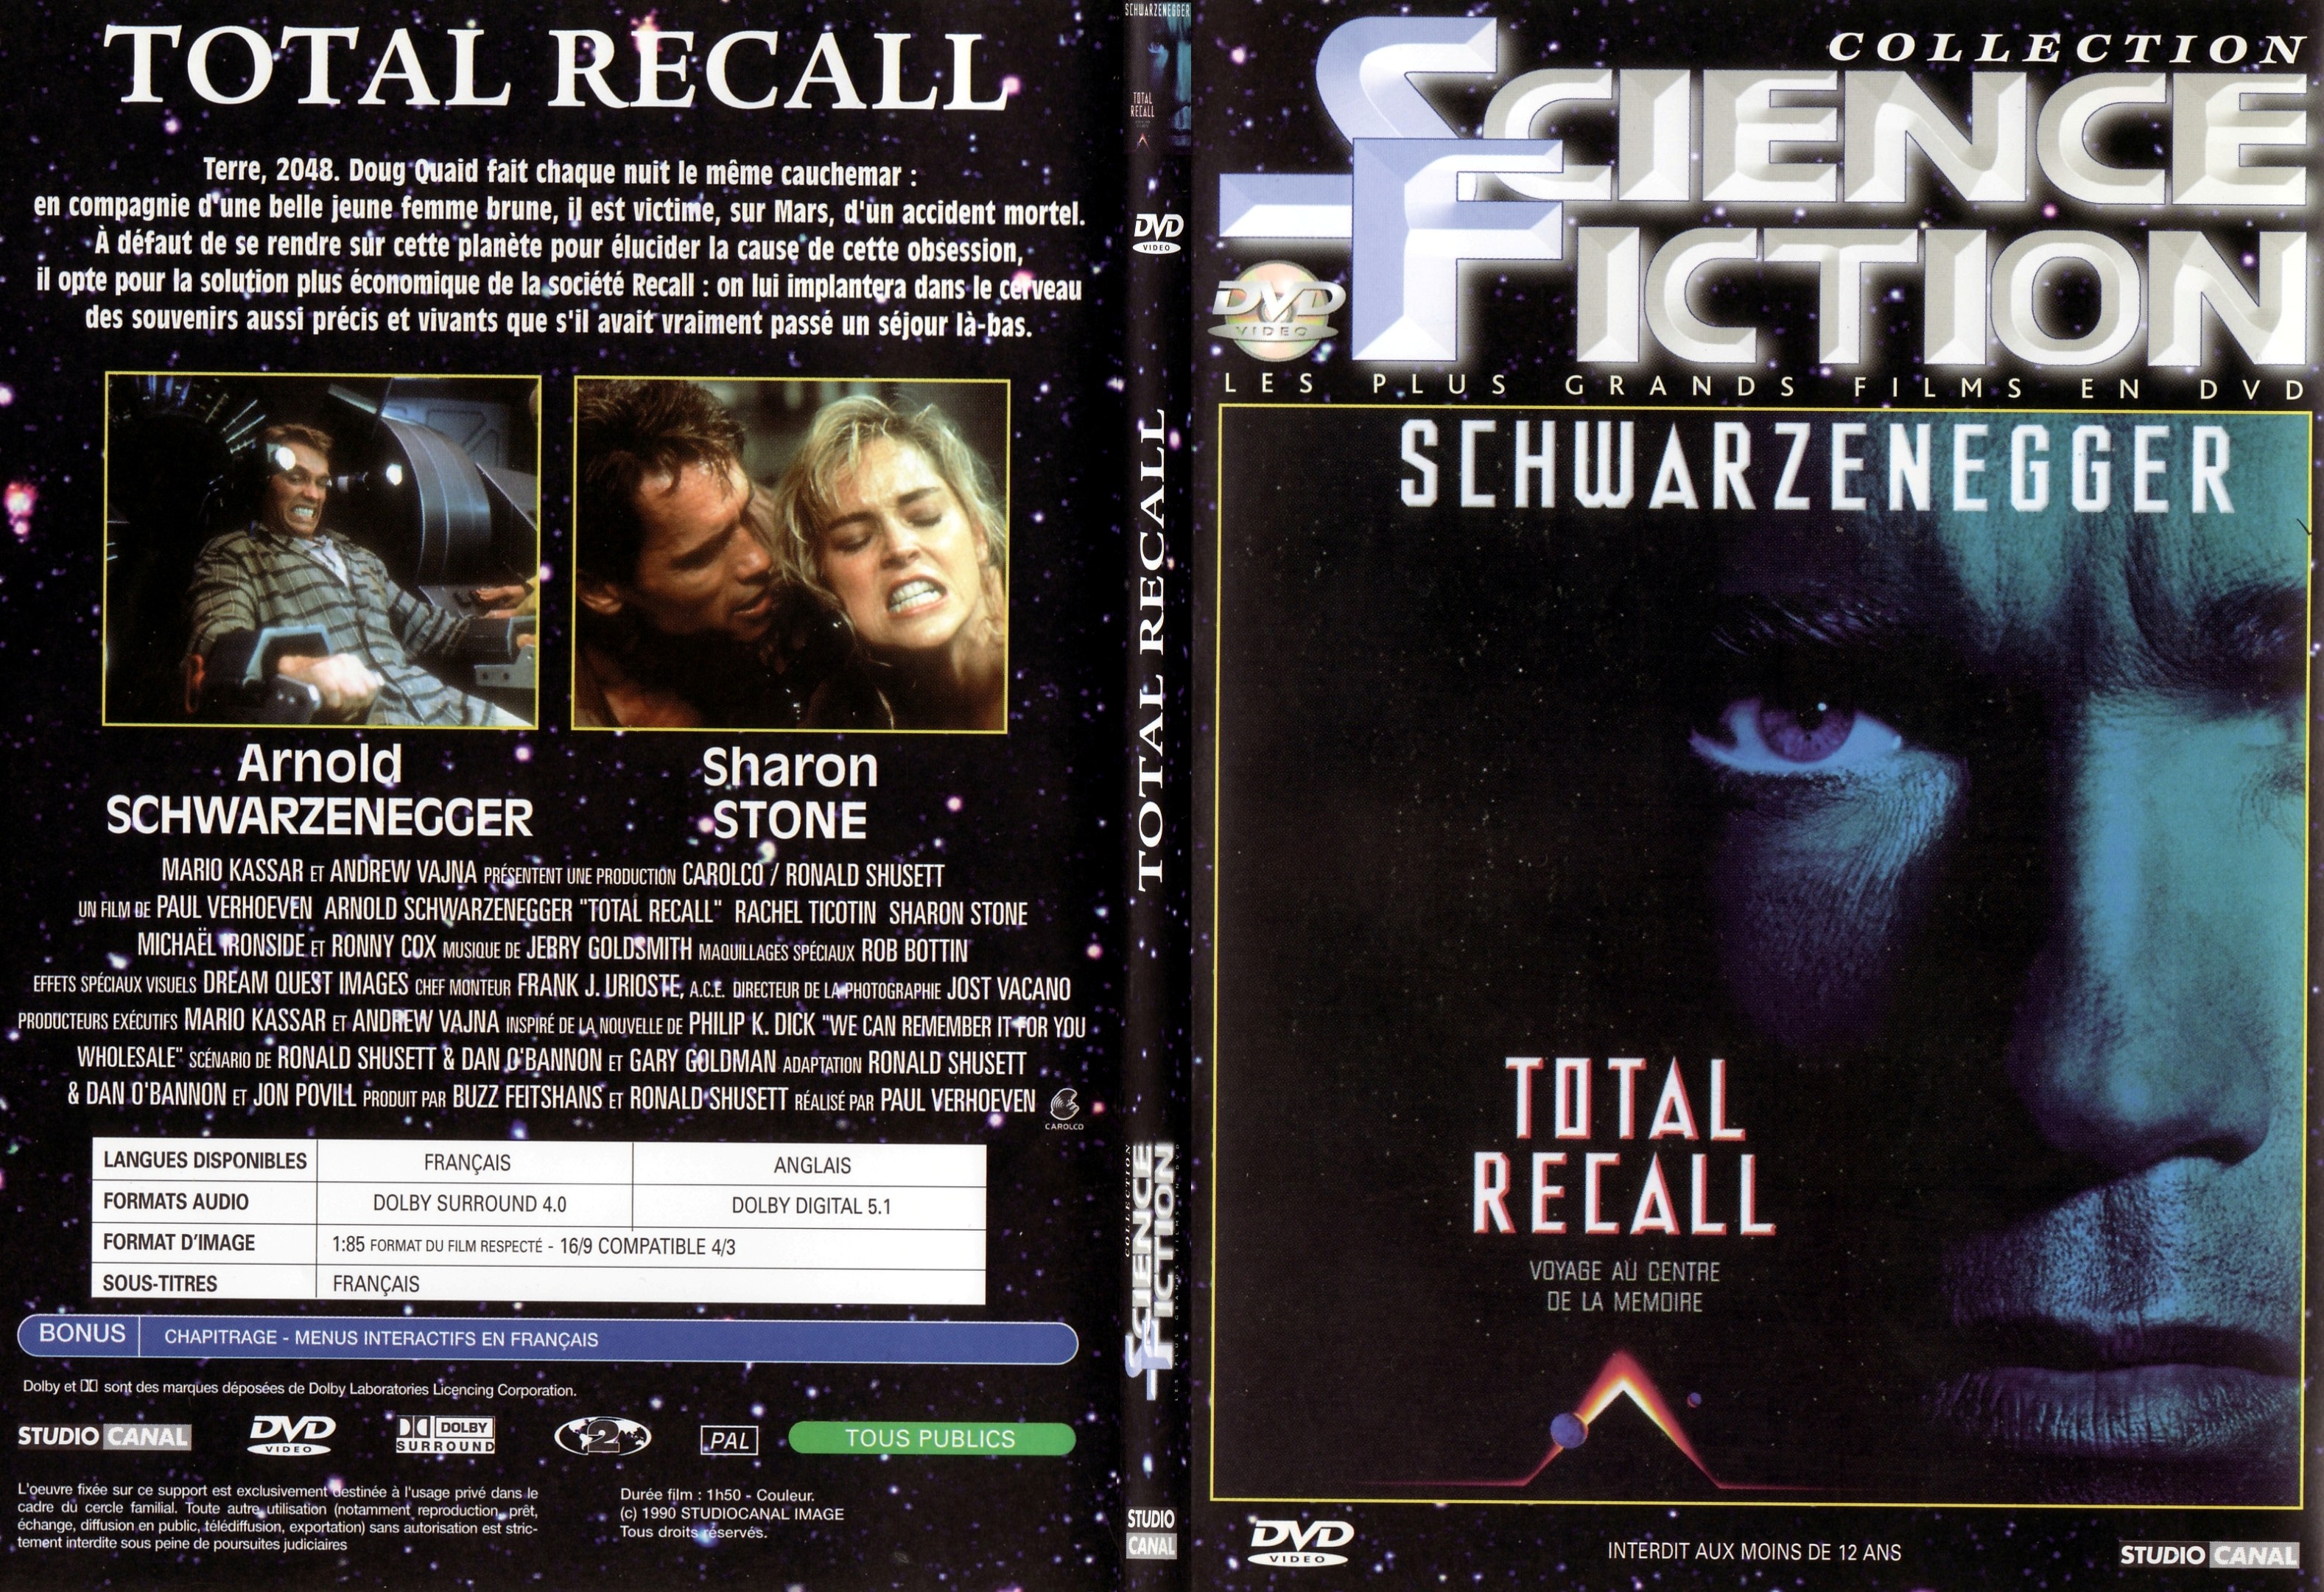 Jaquette DVD Total recall - SLIM v2